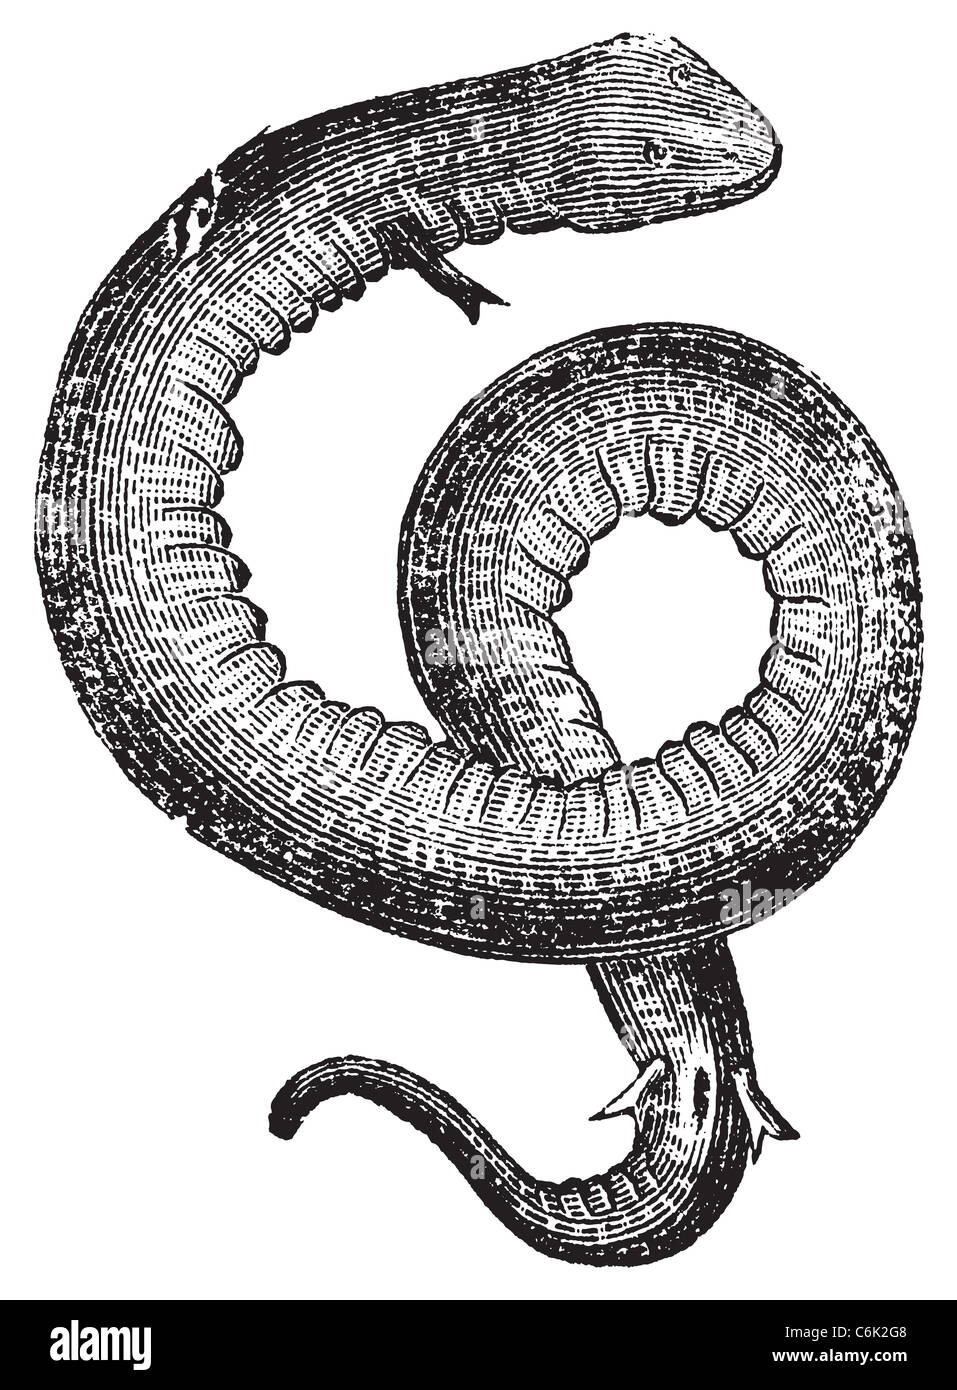 Amphiuma, conger eels or congo snake vintage engraving.. Old engraved illustration of an amphiuma or aquatic salamander. Stock Photo